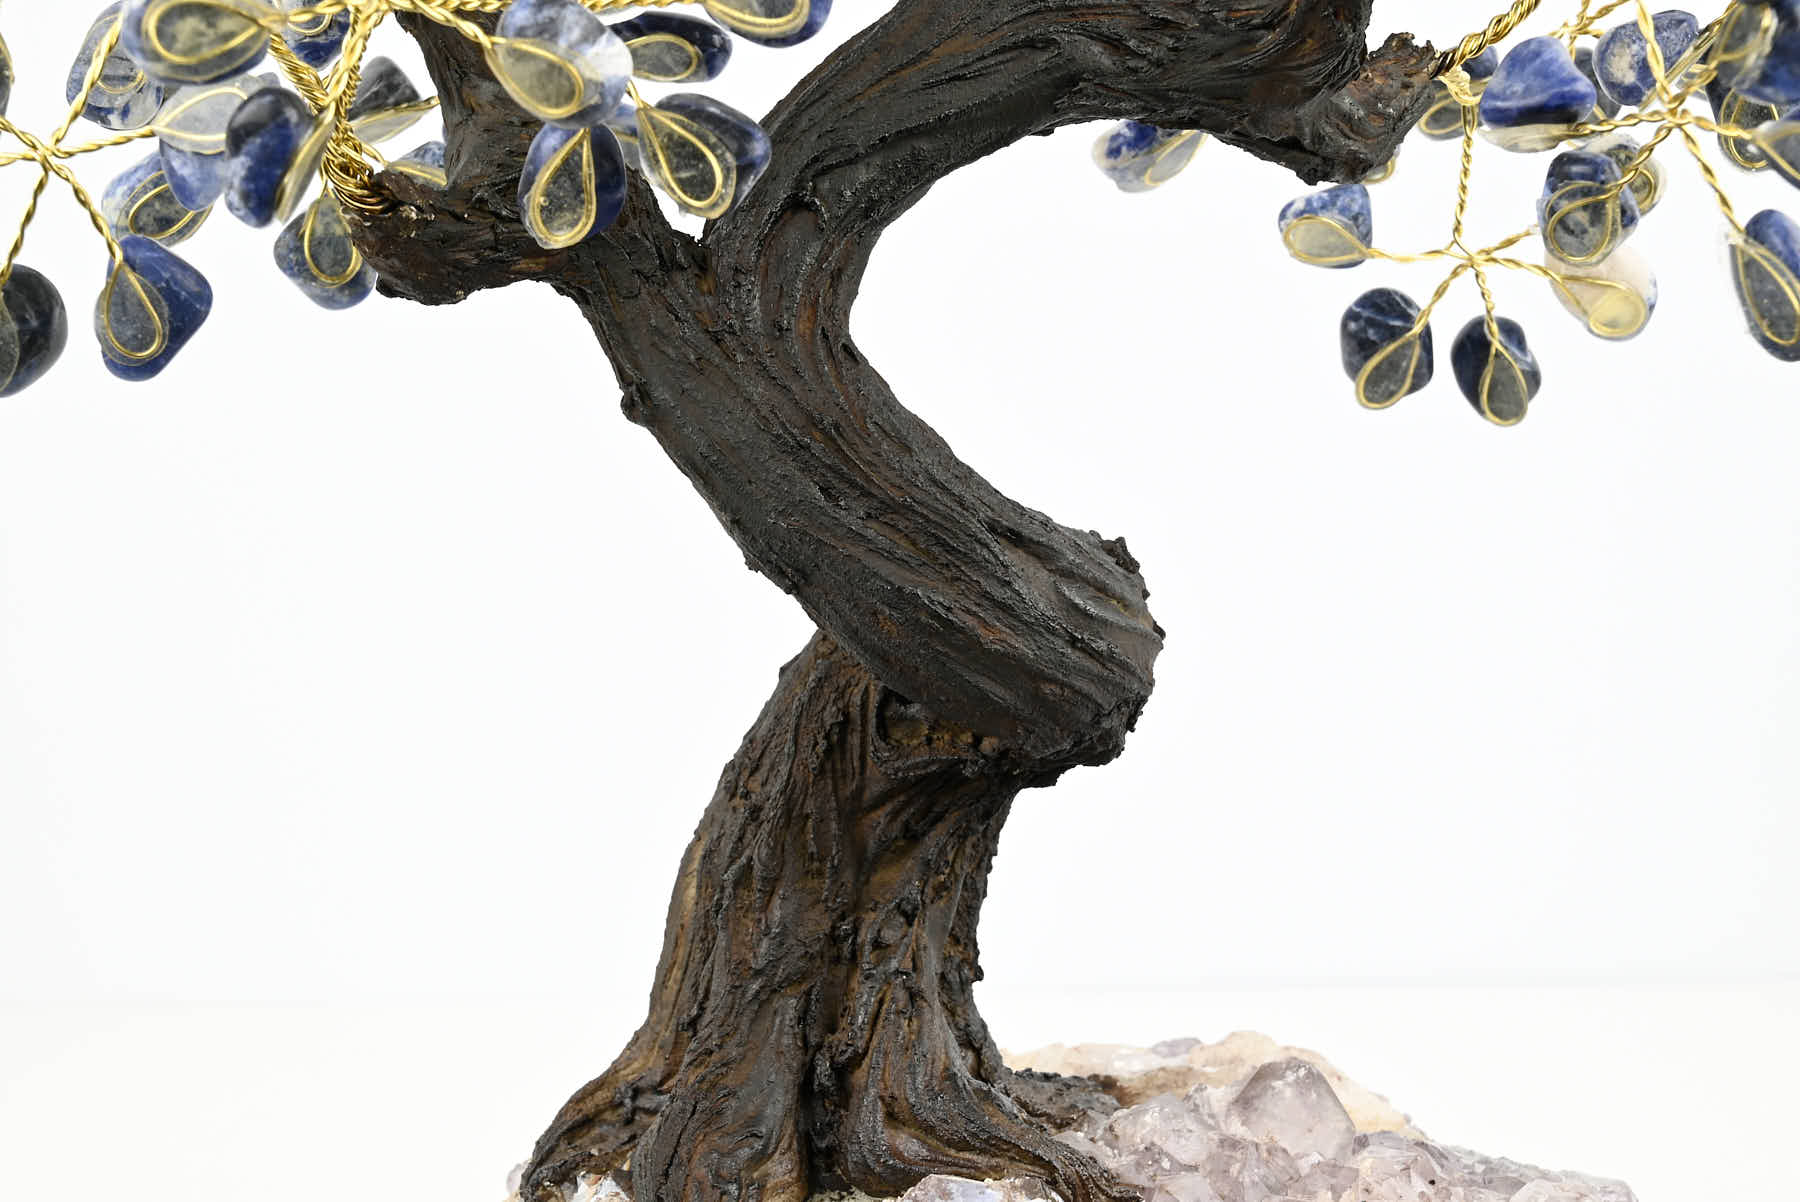 Handmade 35cm Tall Gemstone Tree with Amethyst base and 180 Sodalite gems - #TRSODA-36005